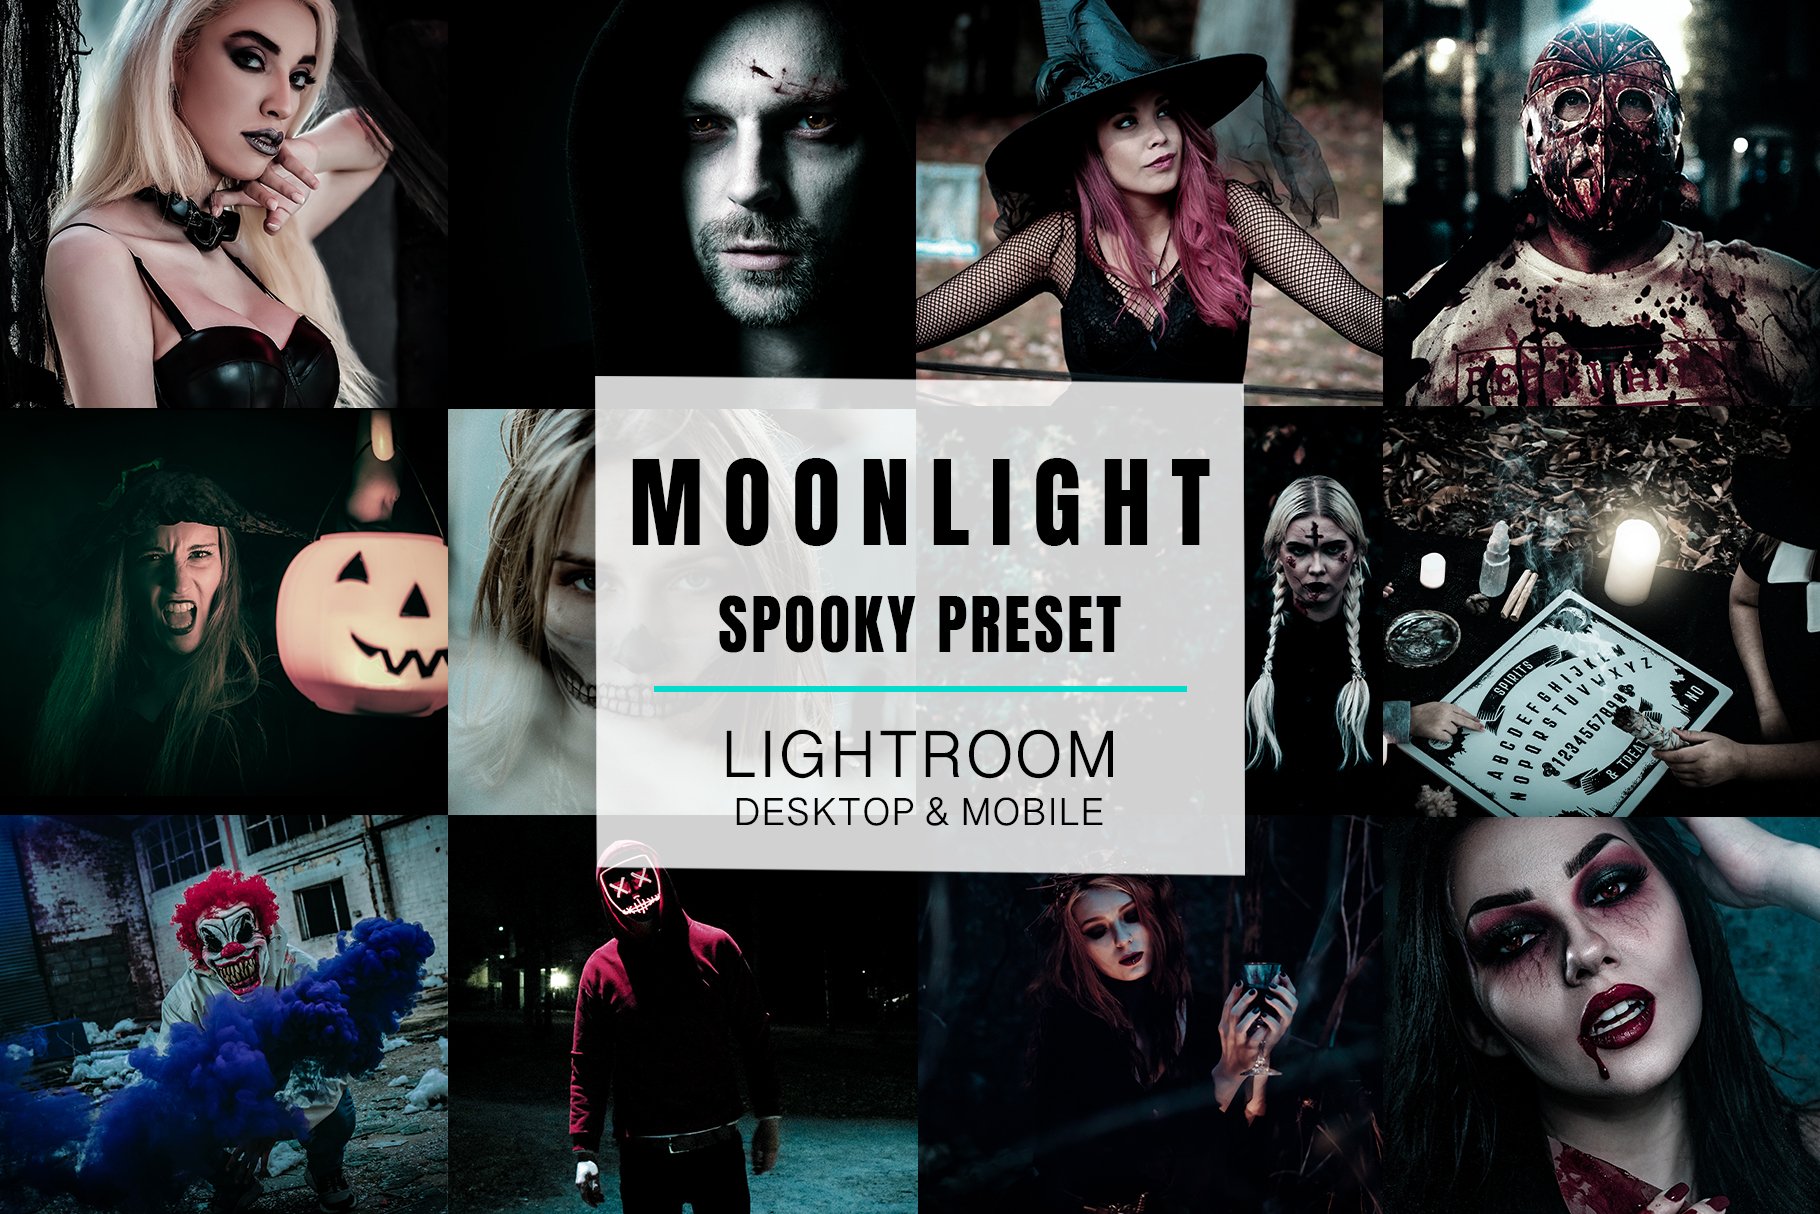 Lightroom Mobile - Spooky Moon Lightcover image.